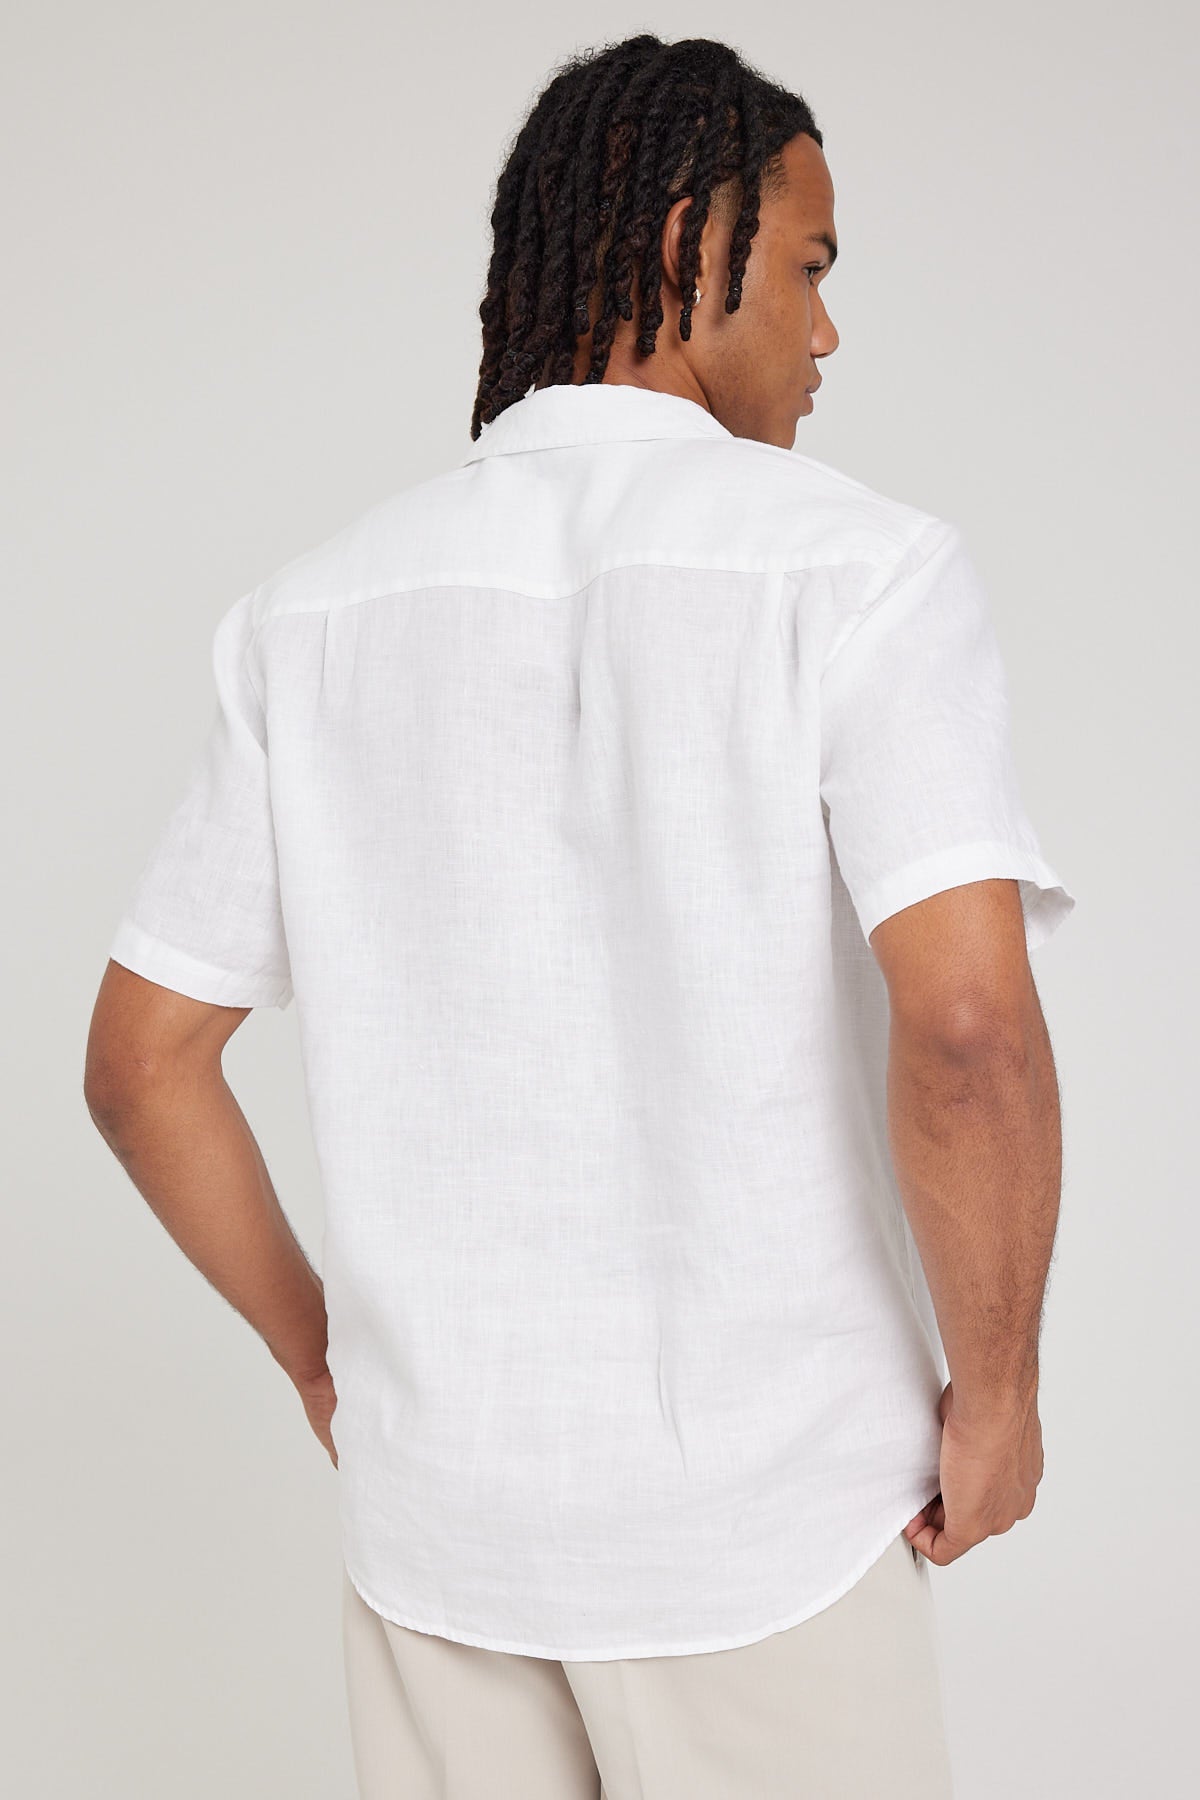 Academy Brand Hampton SS Shirt White